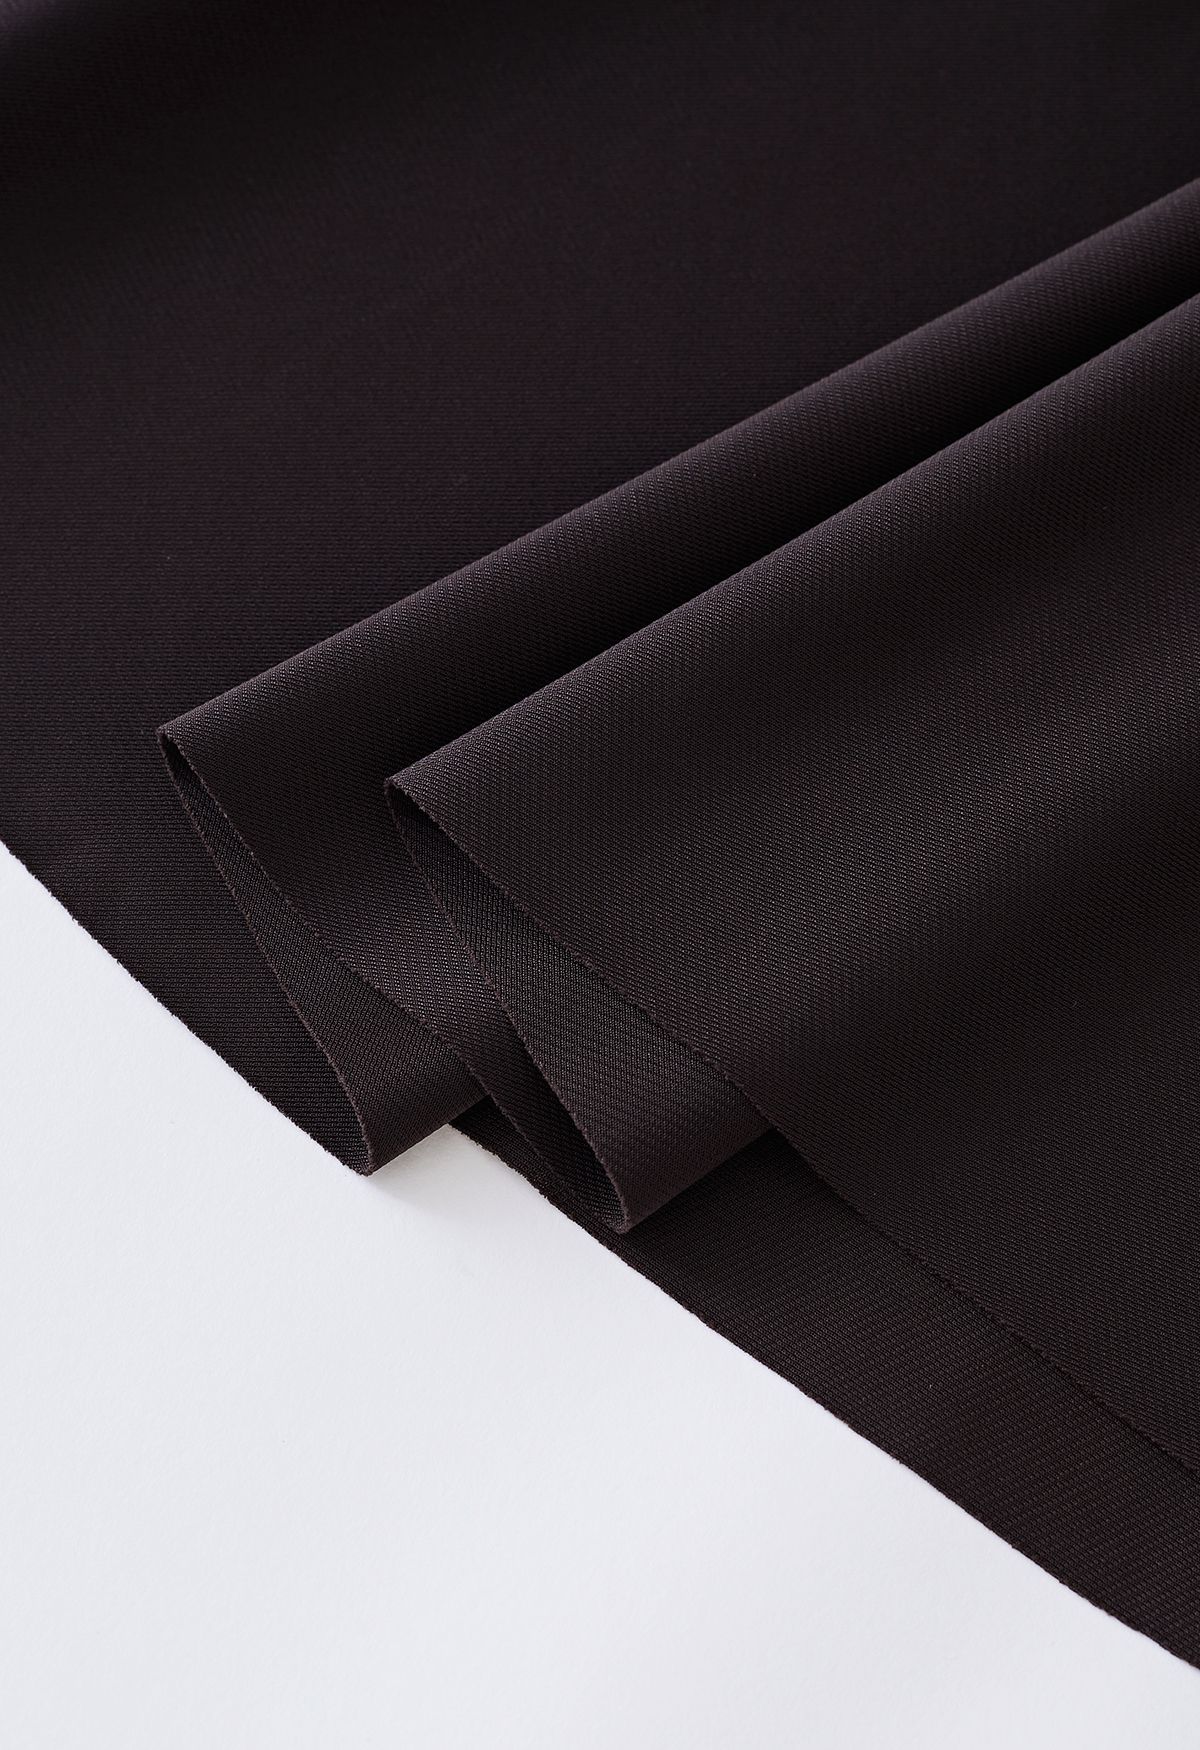 Seam Detailing Pleated Midi Skirt in Brown